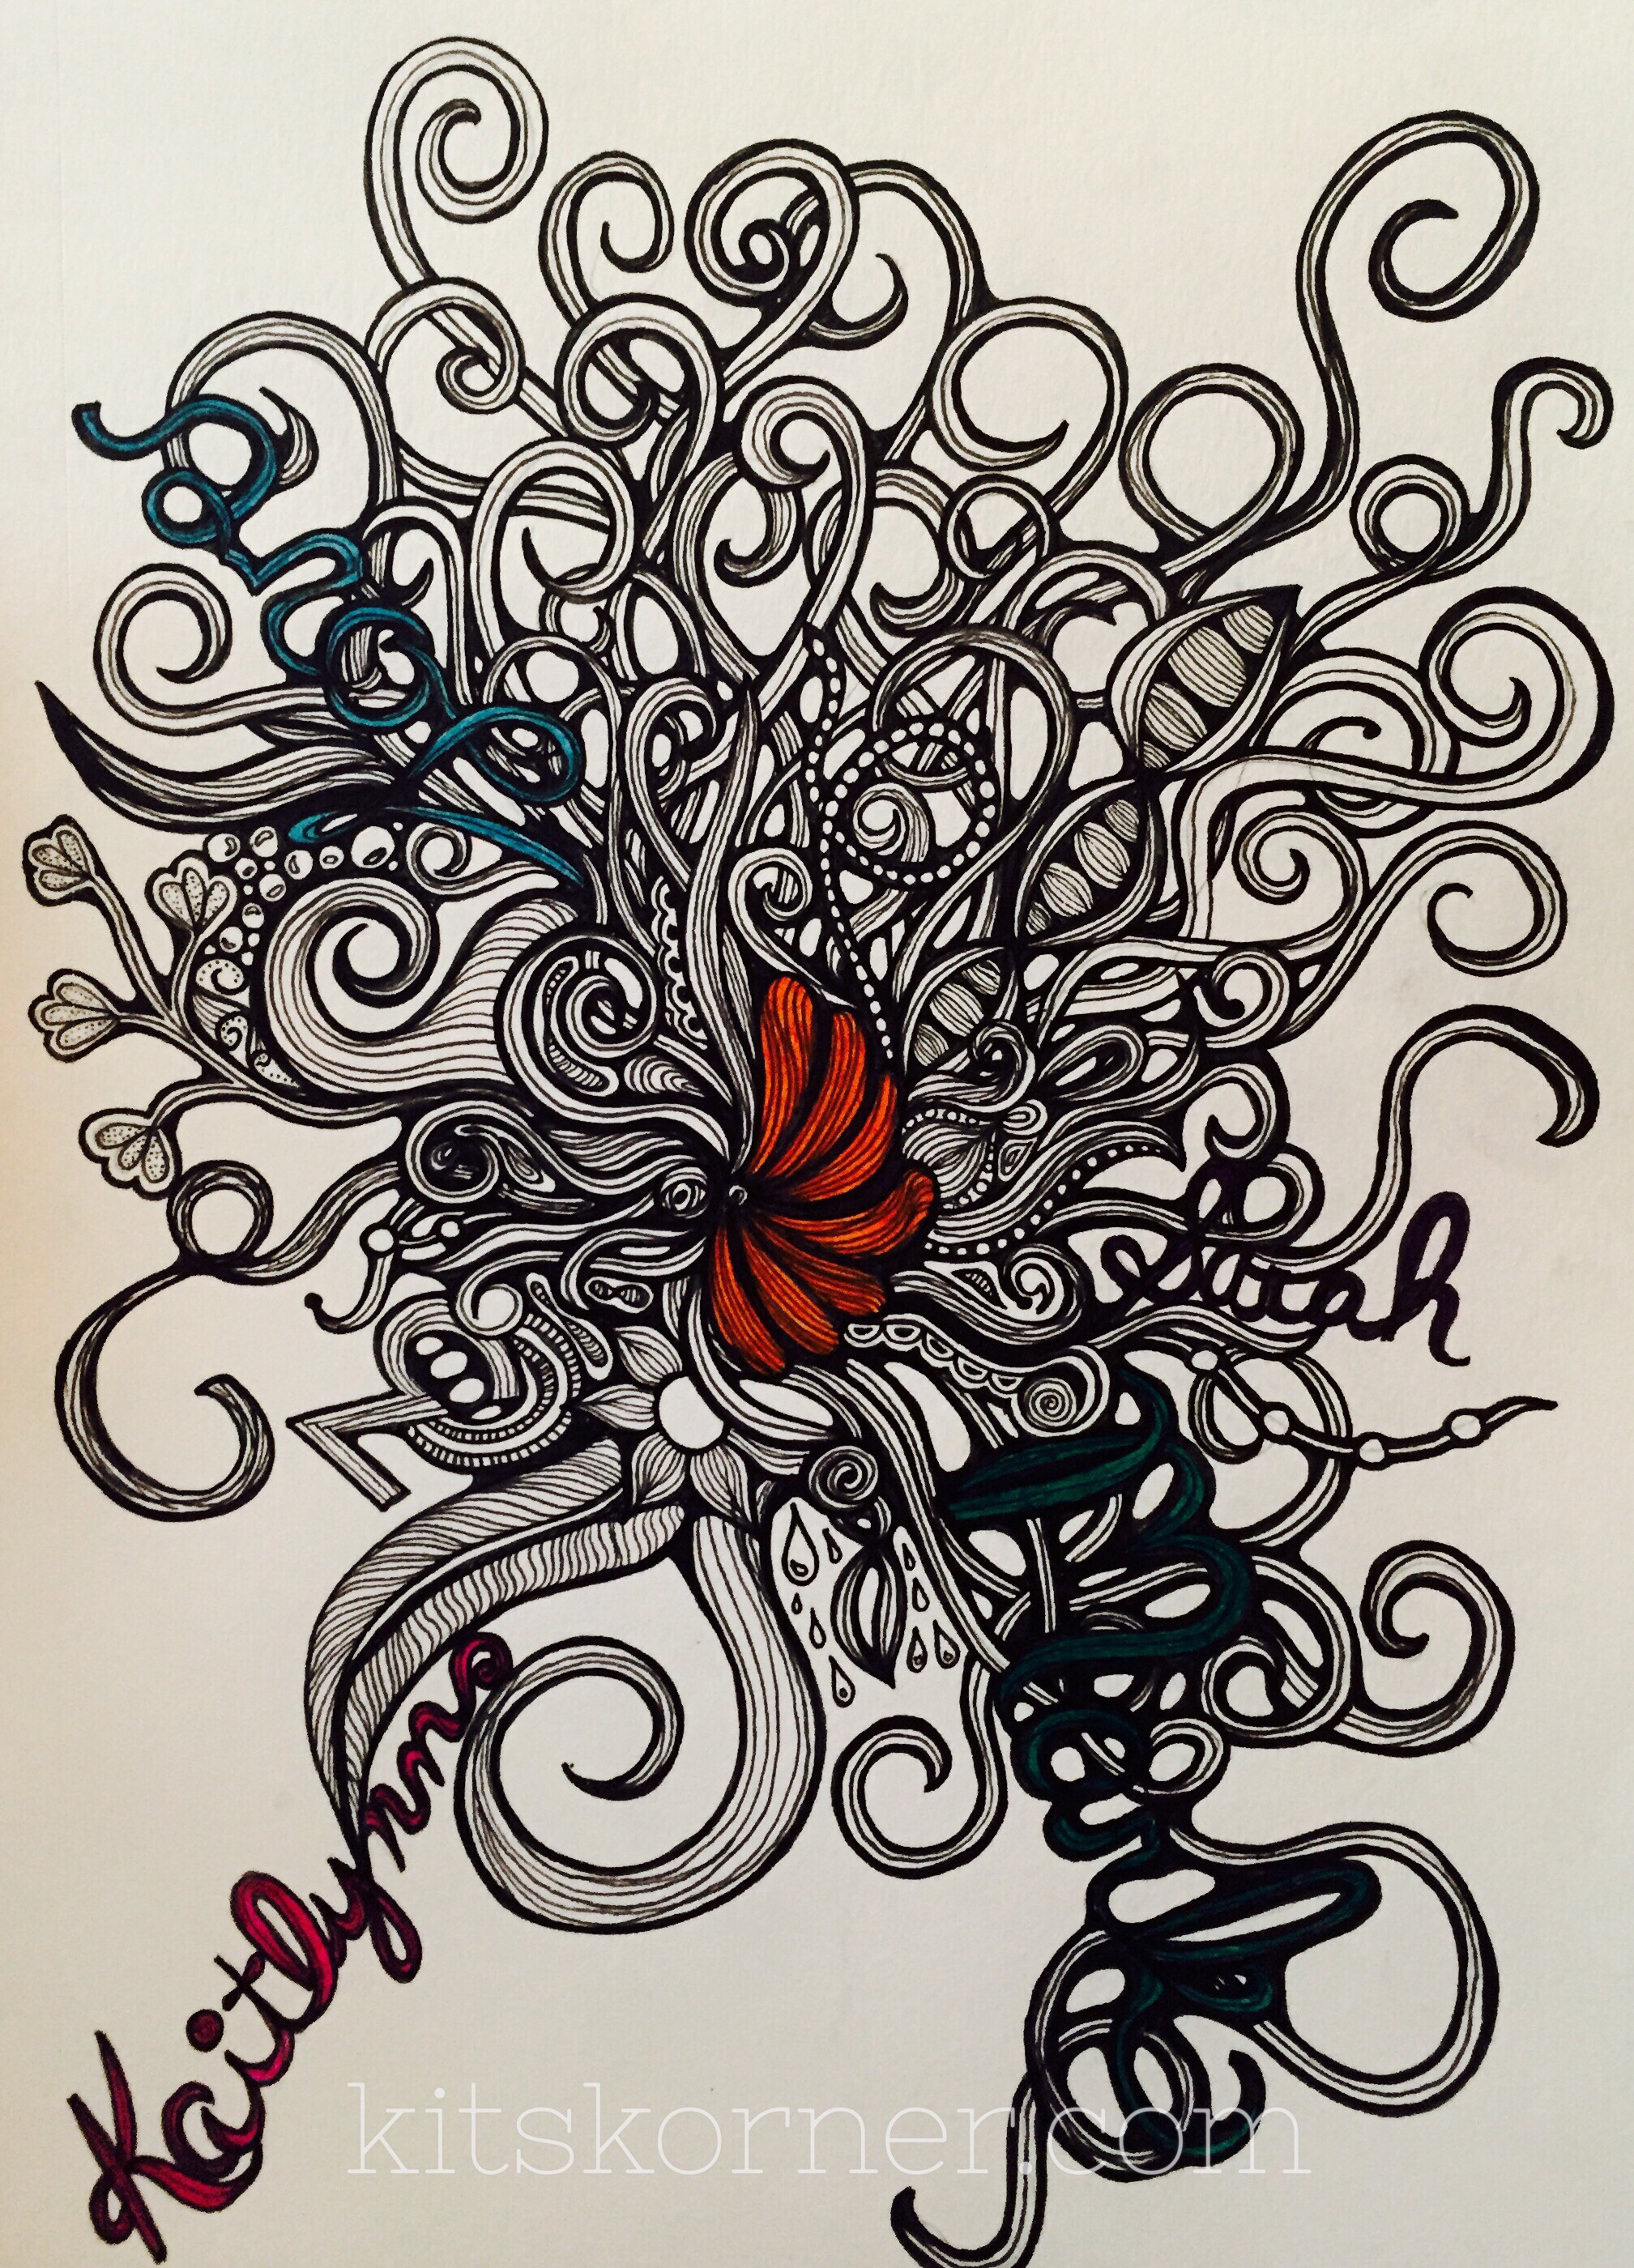 Sketchbook: All Swirled In